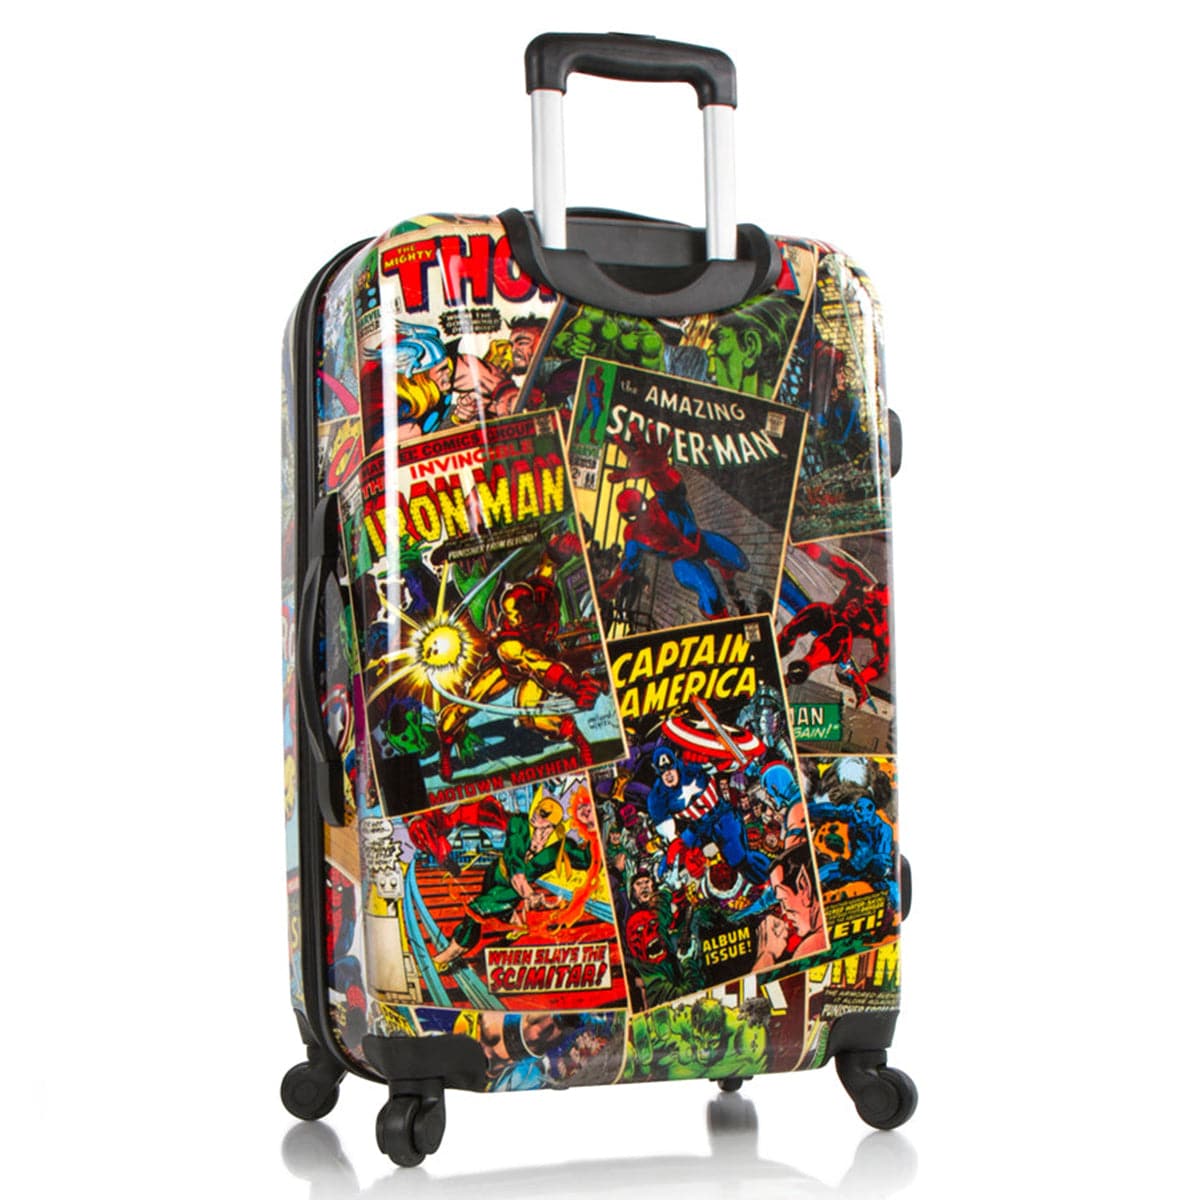 Heys Marvel Young Adult 2 Piece Luggage Set